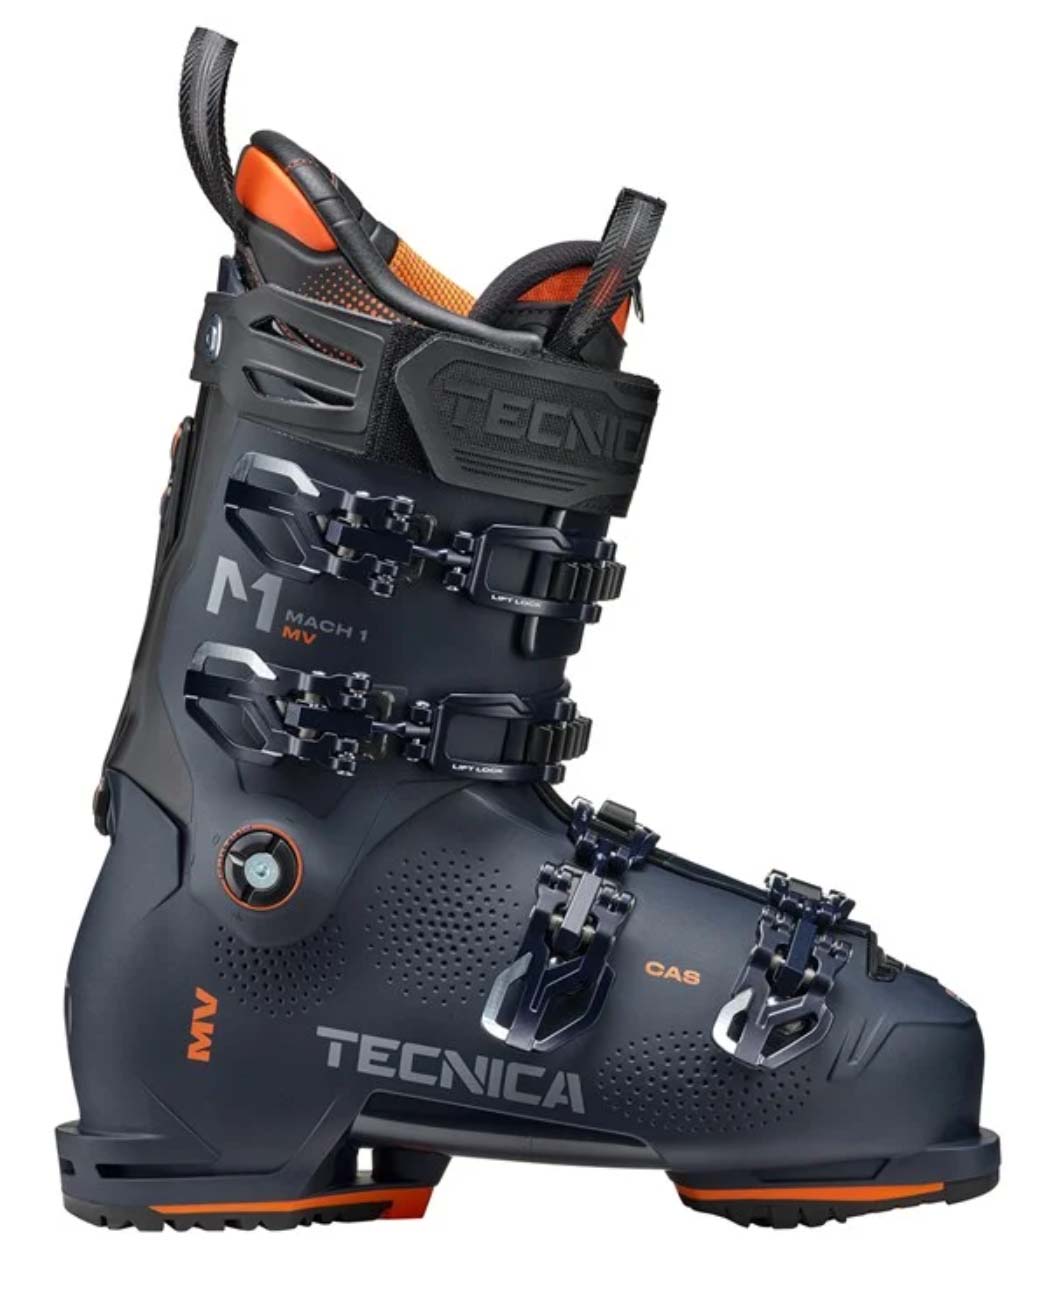 Tecnica Mach1 MV 120 ski boots